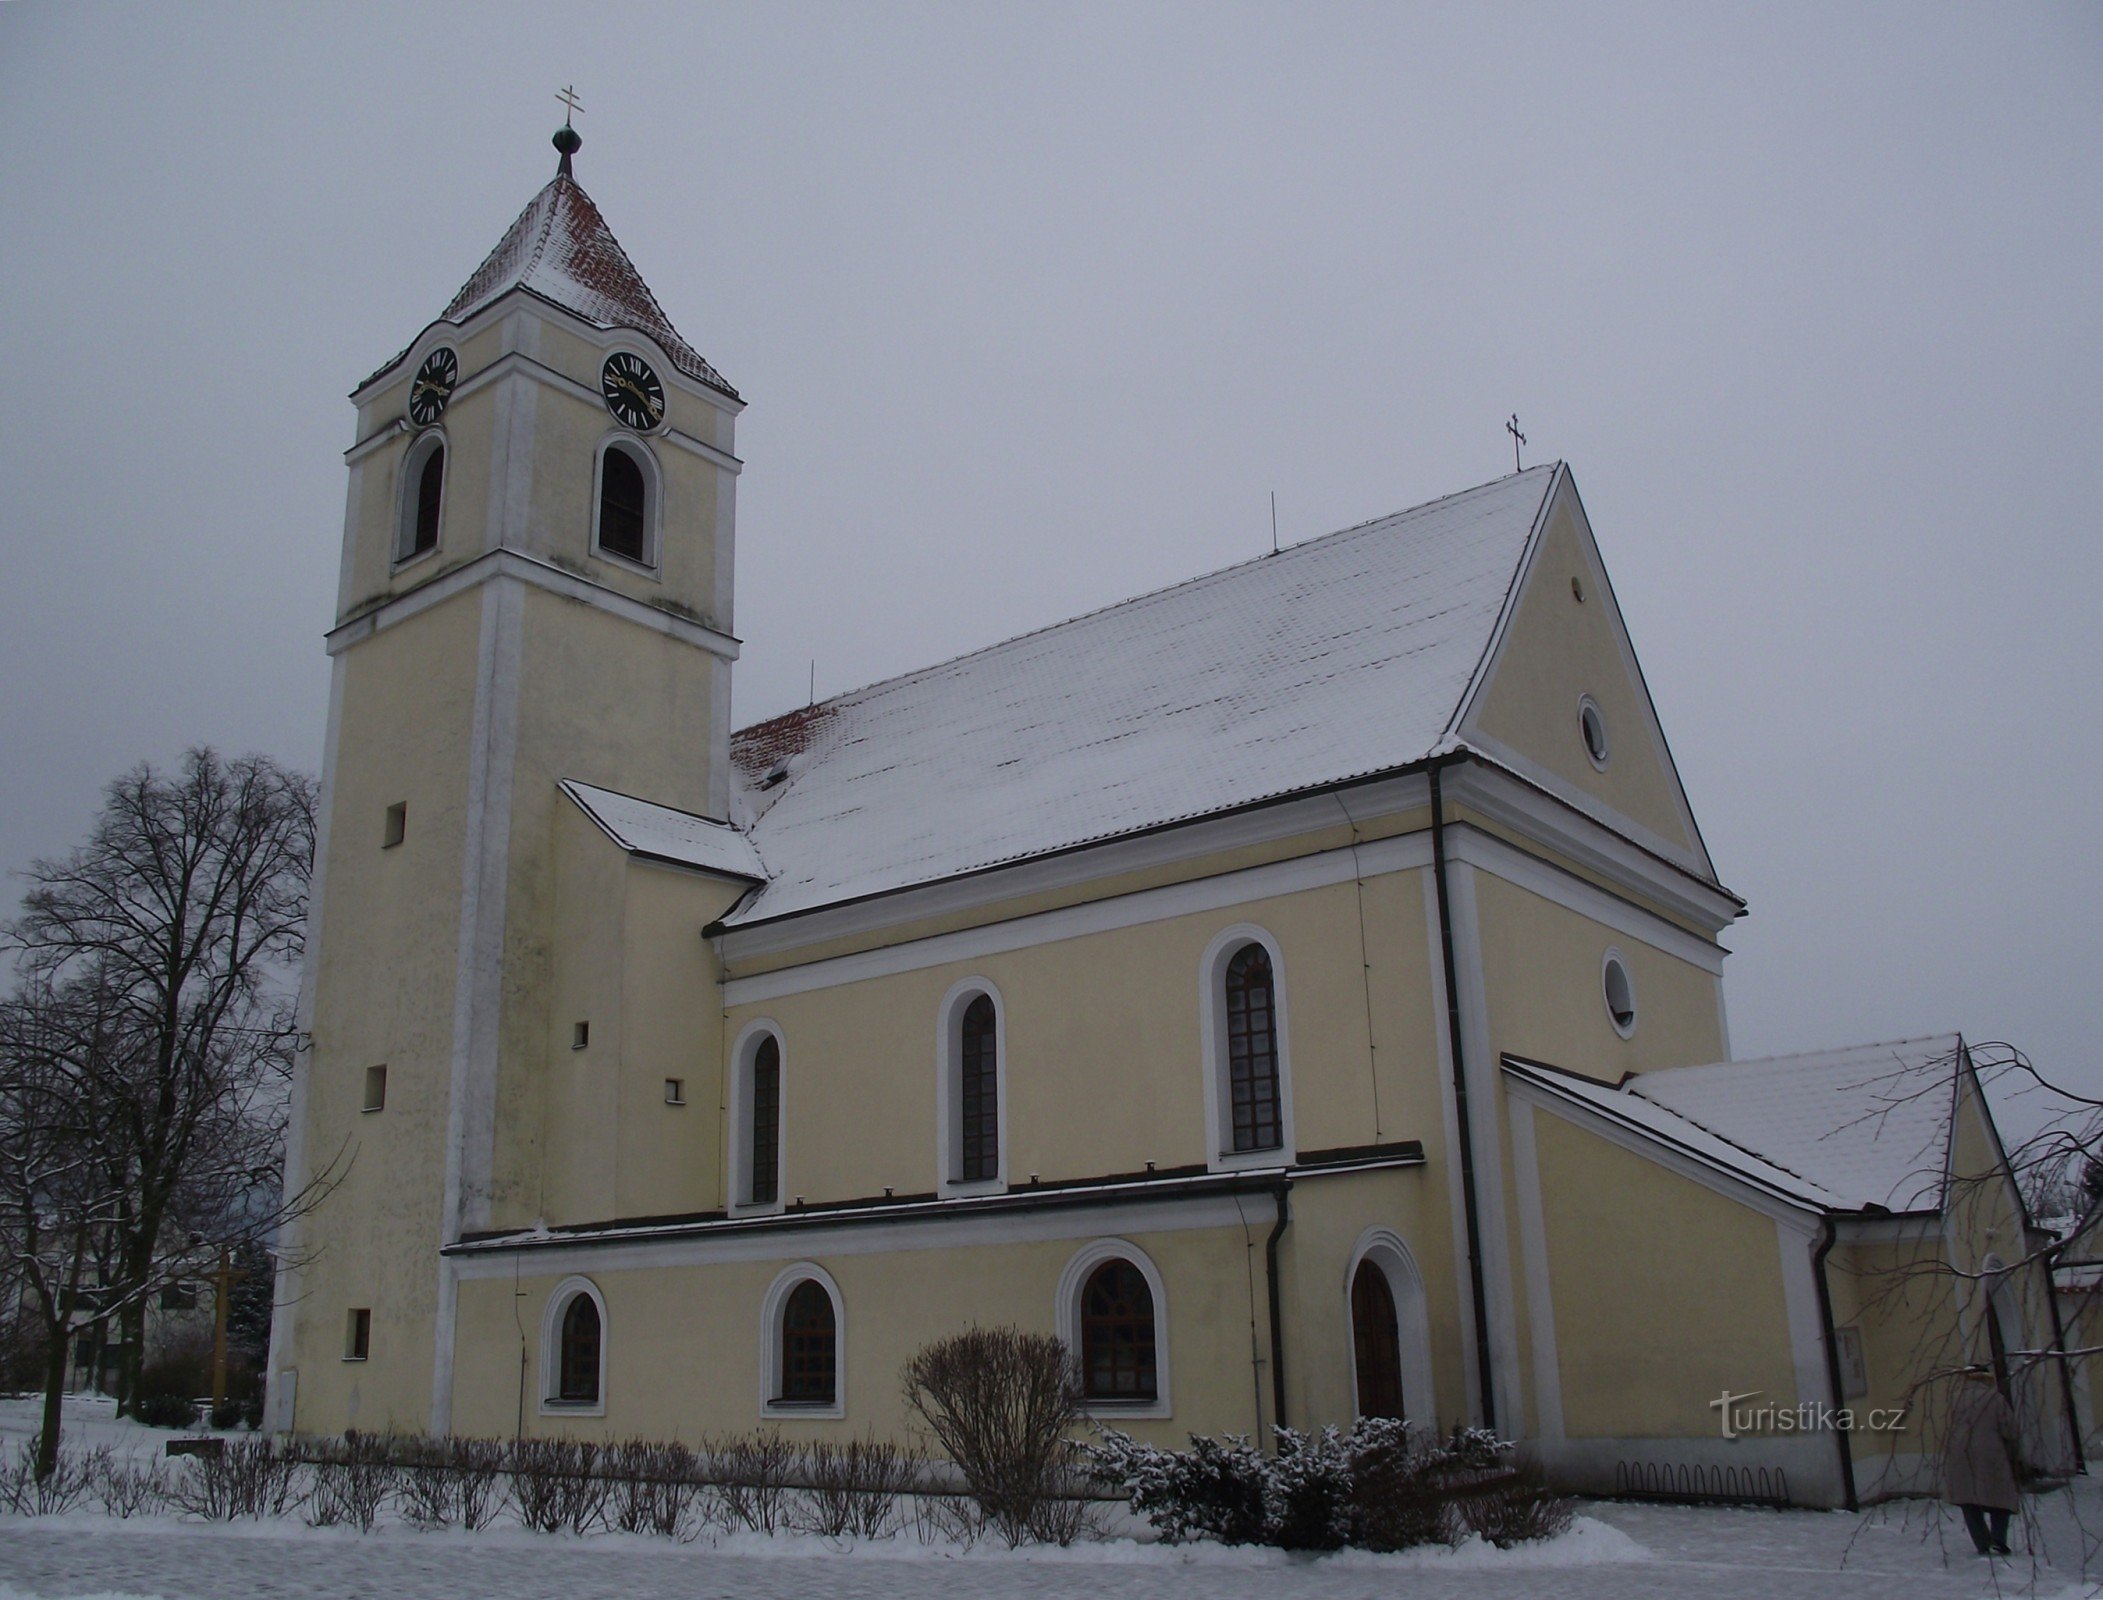 Cetkovice - igreja de St. Filipe e Jacó